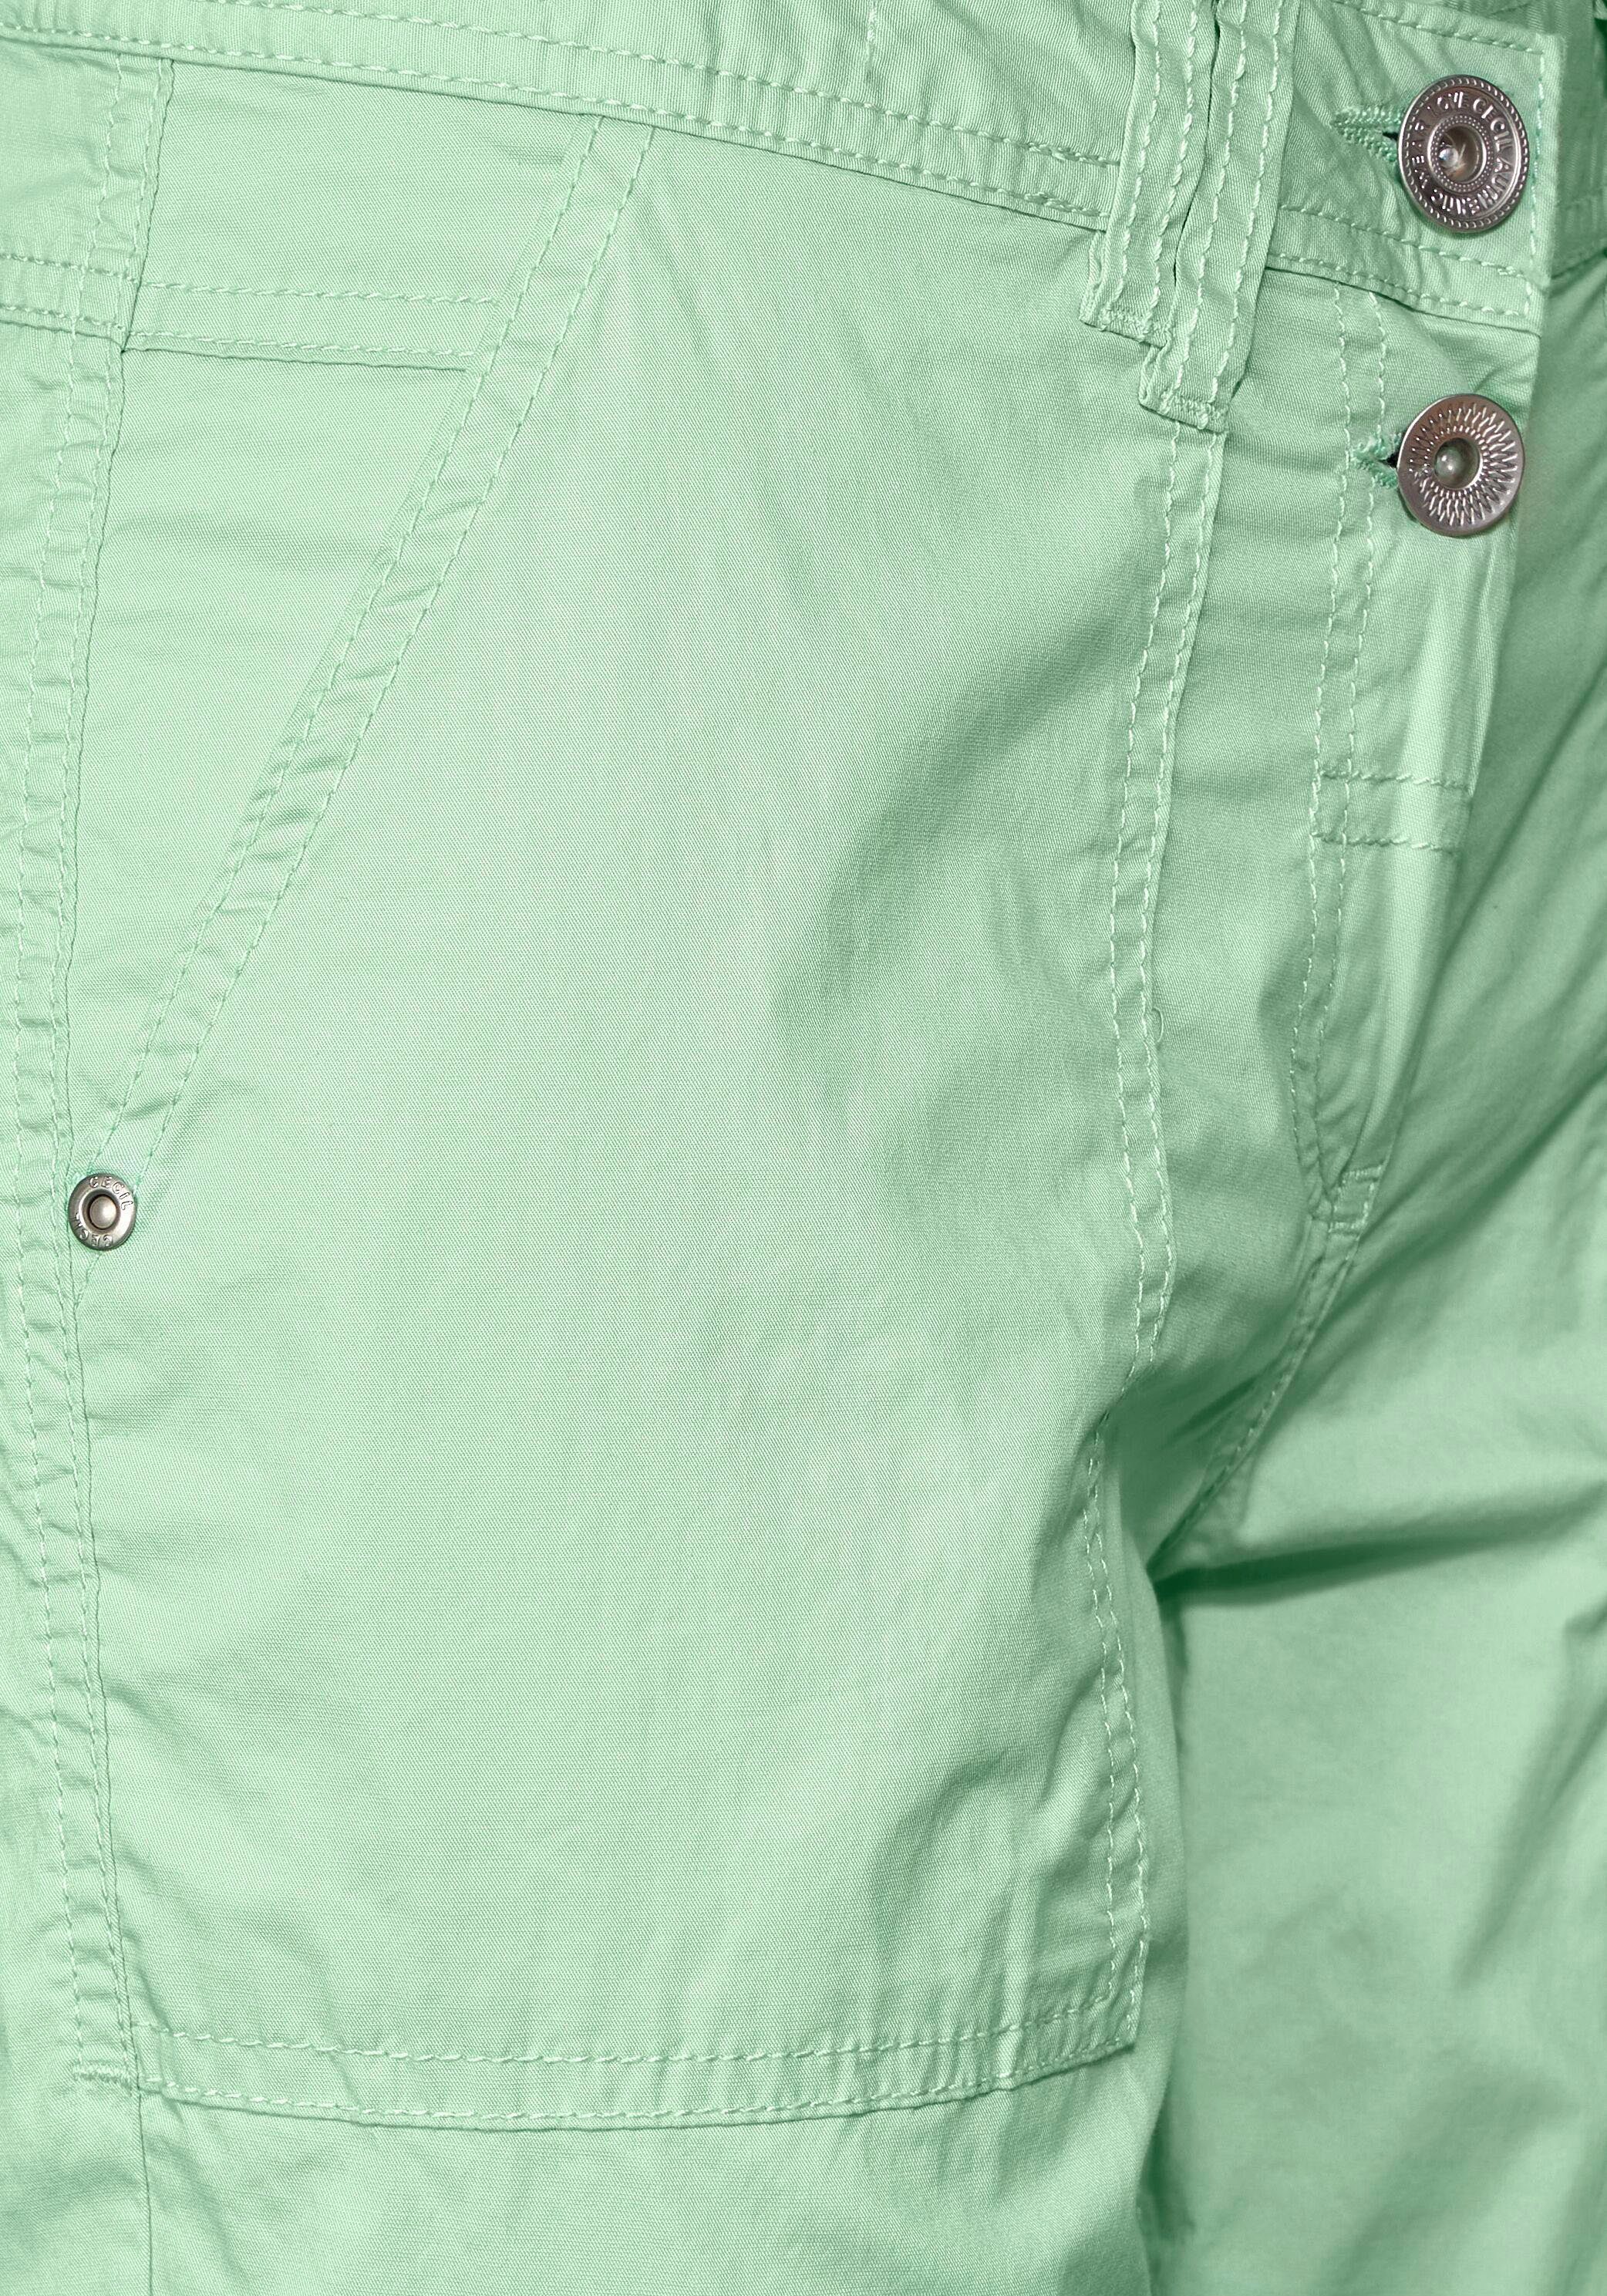 Paper NOS kontrastfarbenen New Style am Logoschriftzügen Cecil 3/4-Hose Bundinneren York green mit